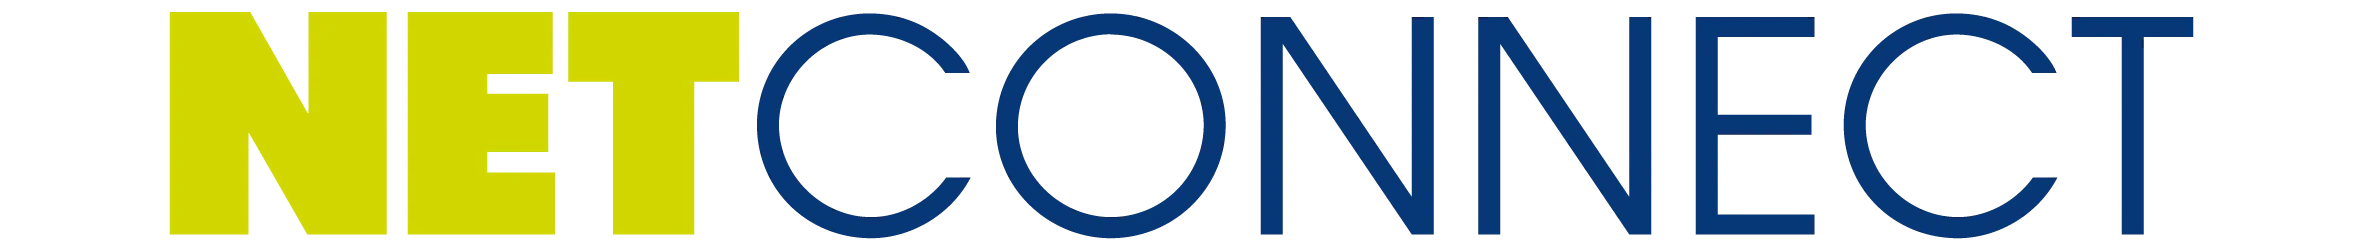 NetConnect logo